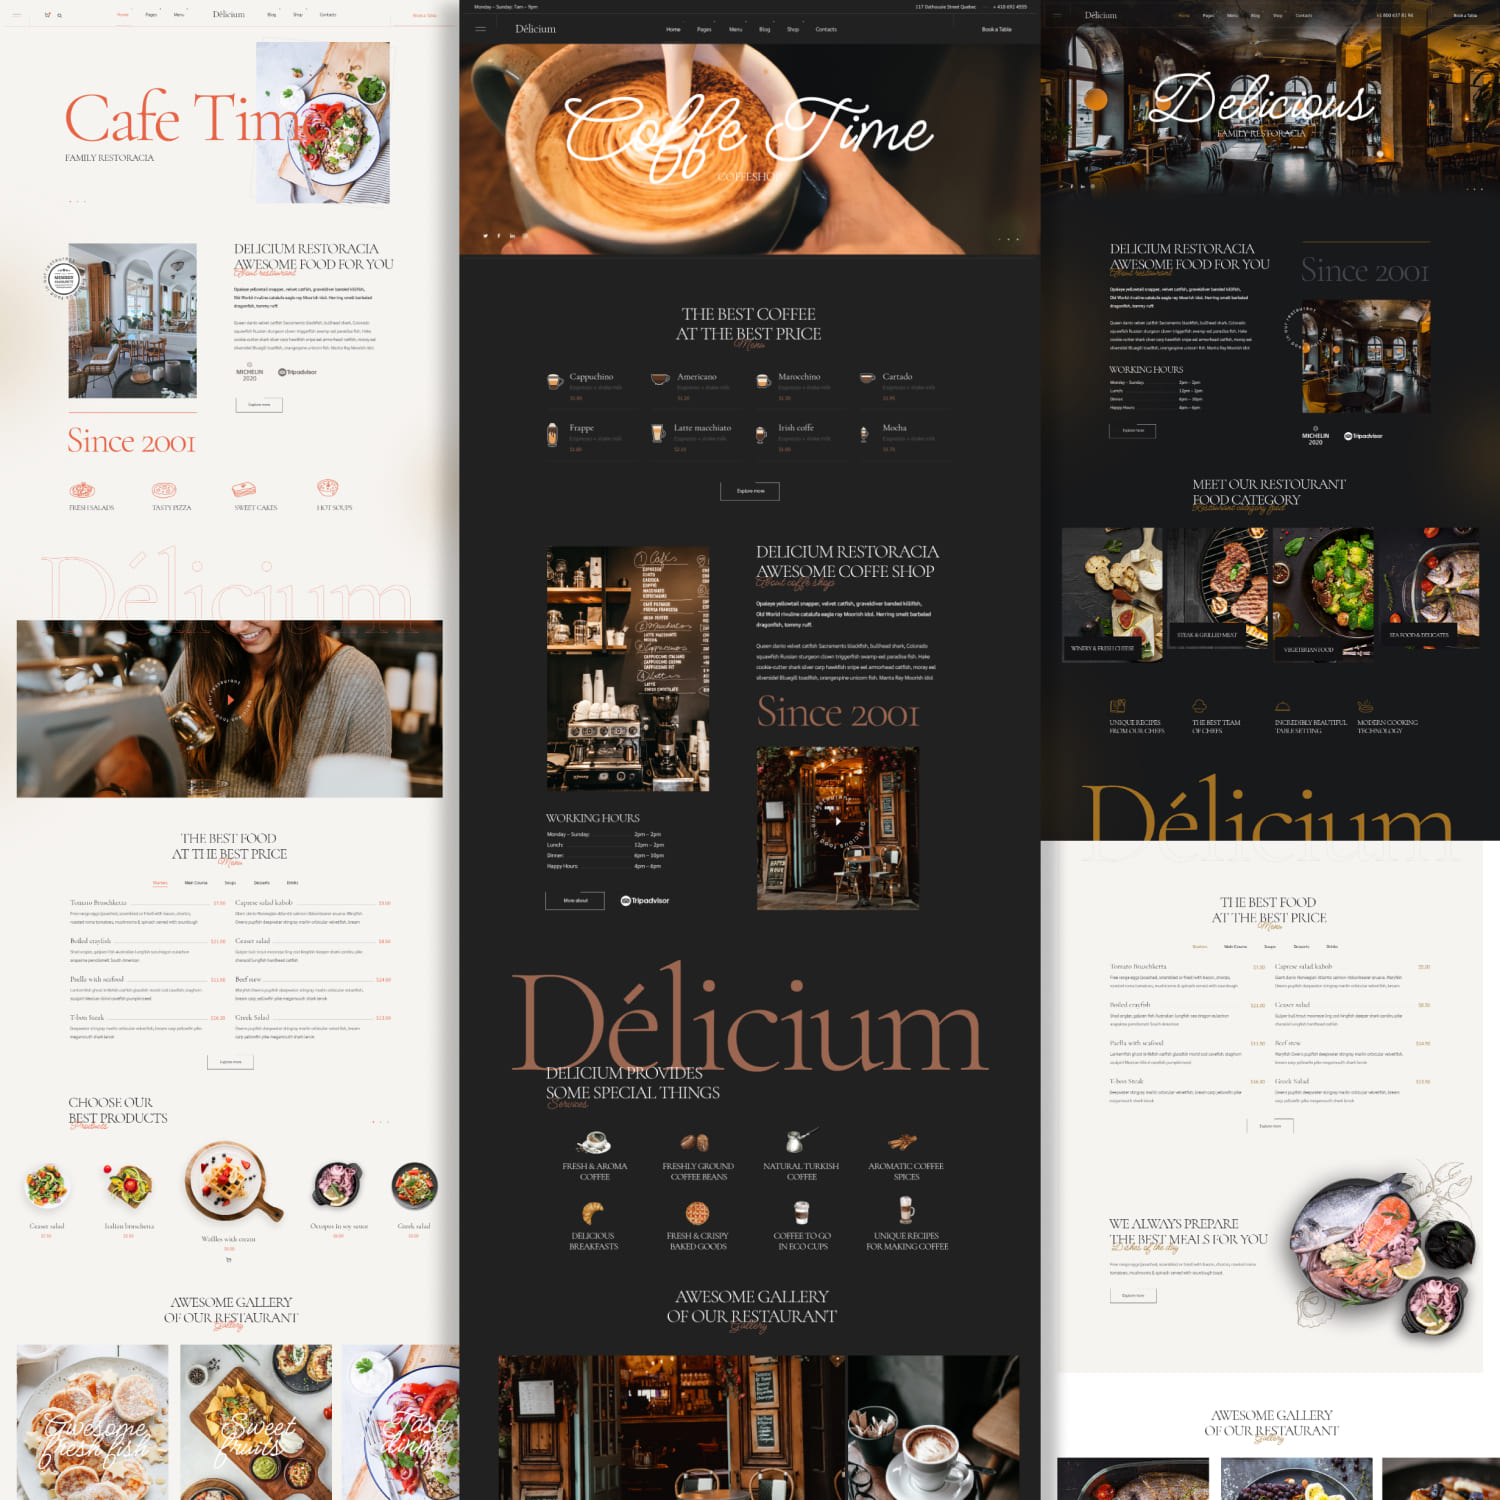 Delicium | Restaurant & Cafe WordPress Theme cover.